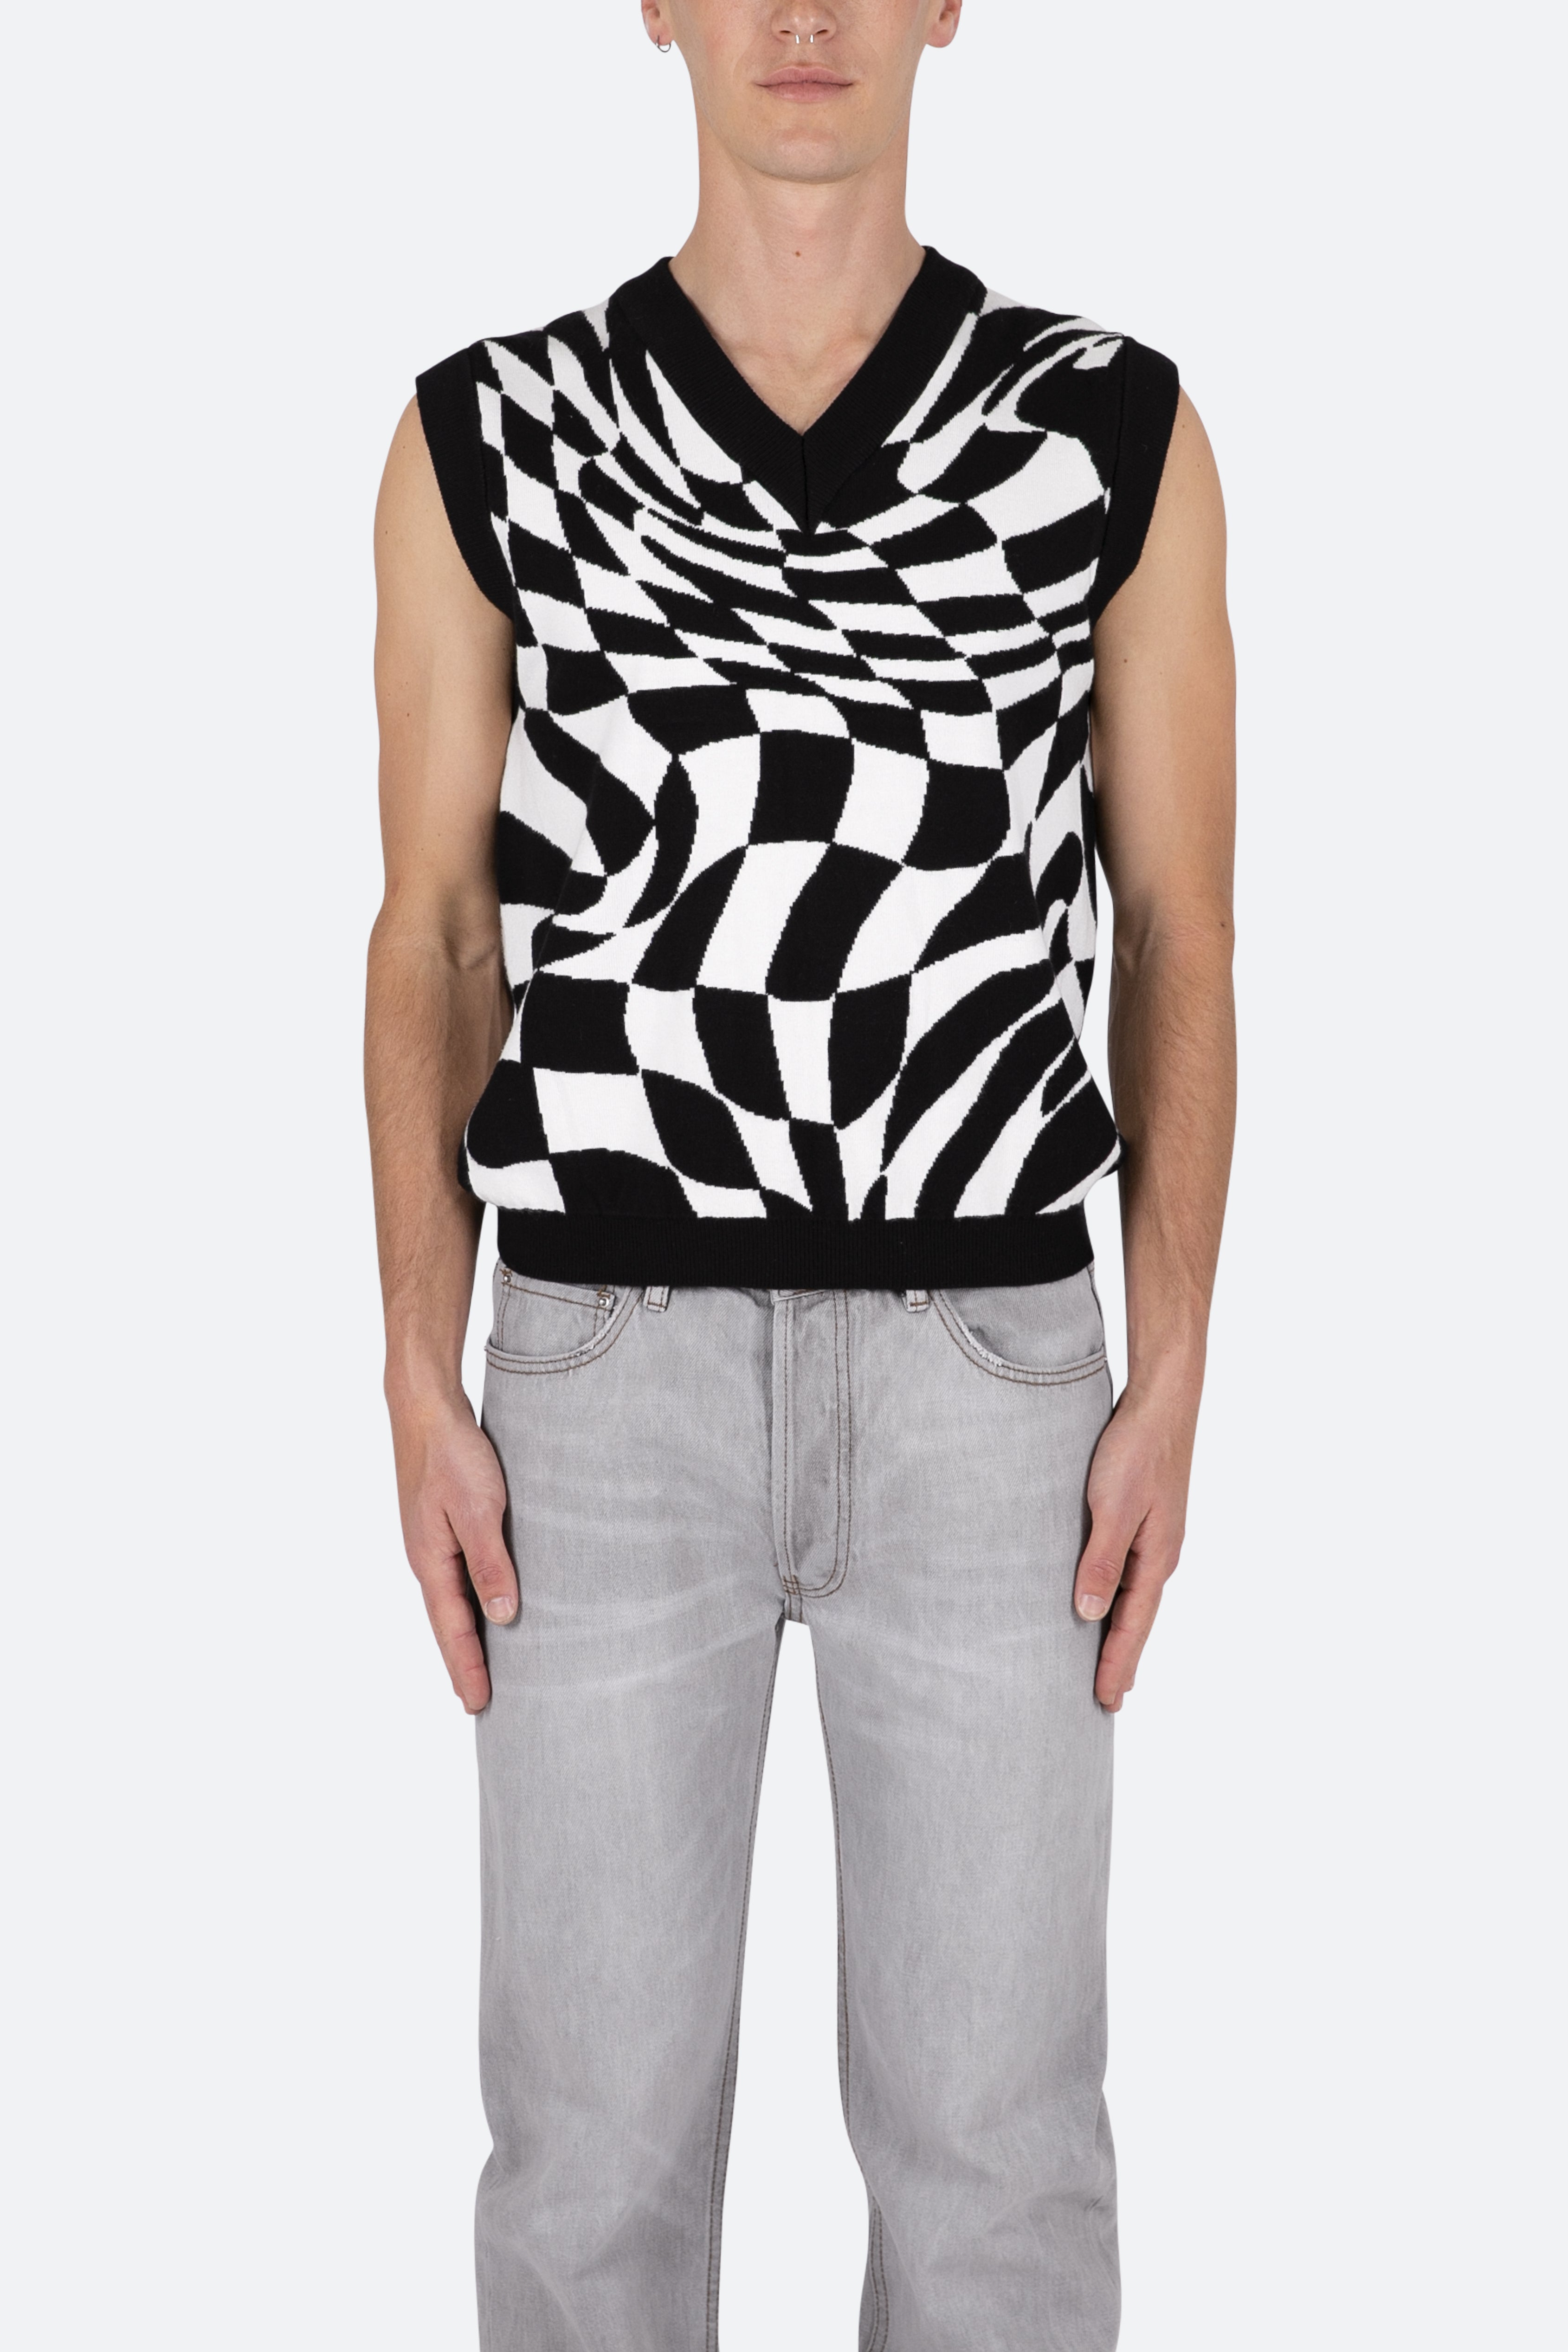 Warped Checker Vest - Black/White